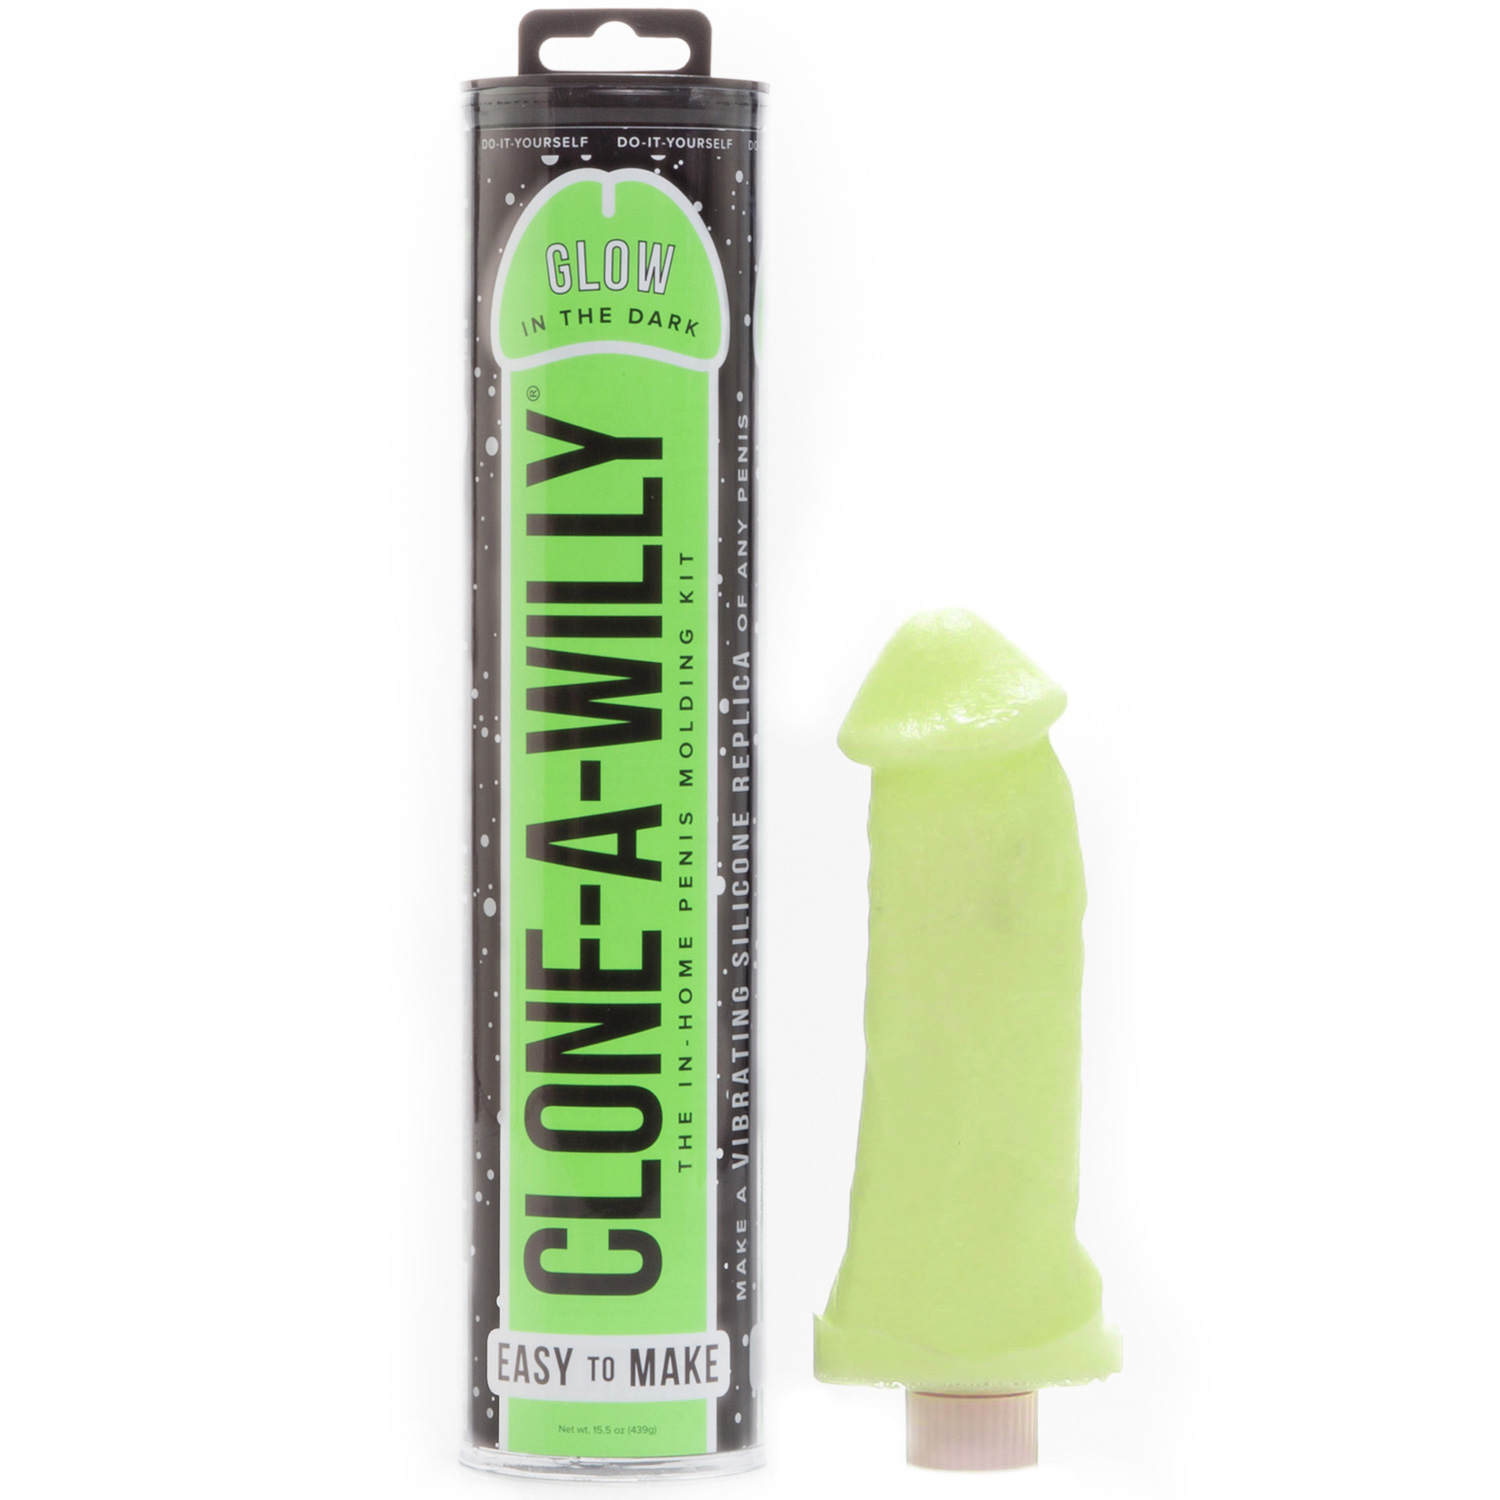 Clone-A-Willy DIY Homemade Dildo Clone Kit Glow In The Dark Green - Green thumbnail